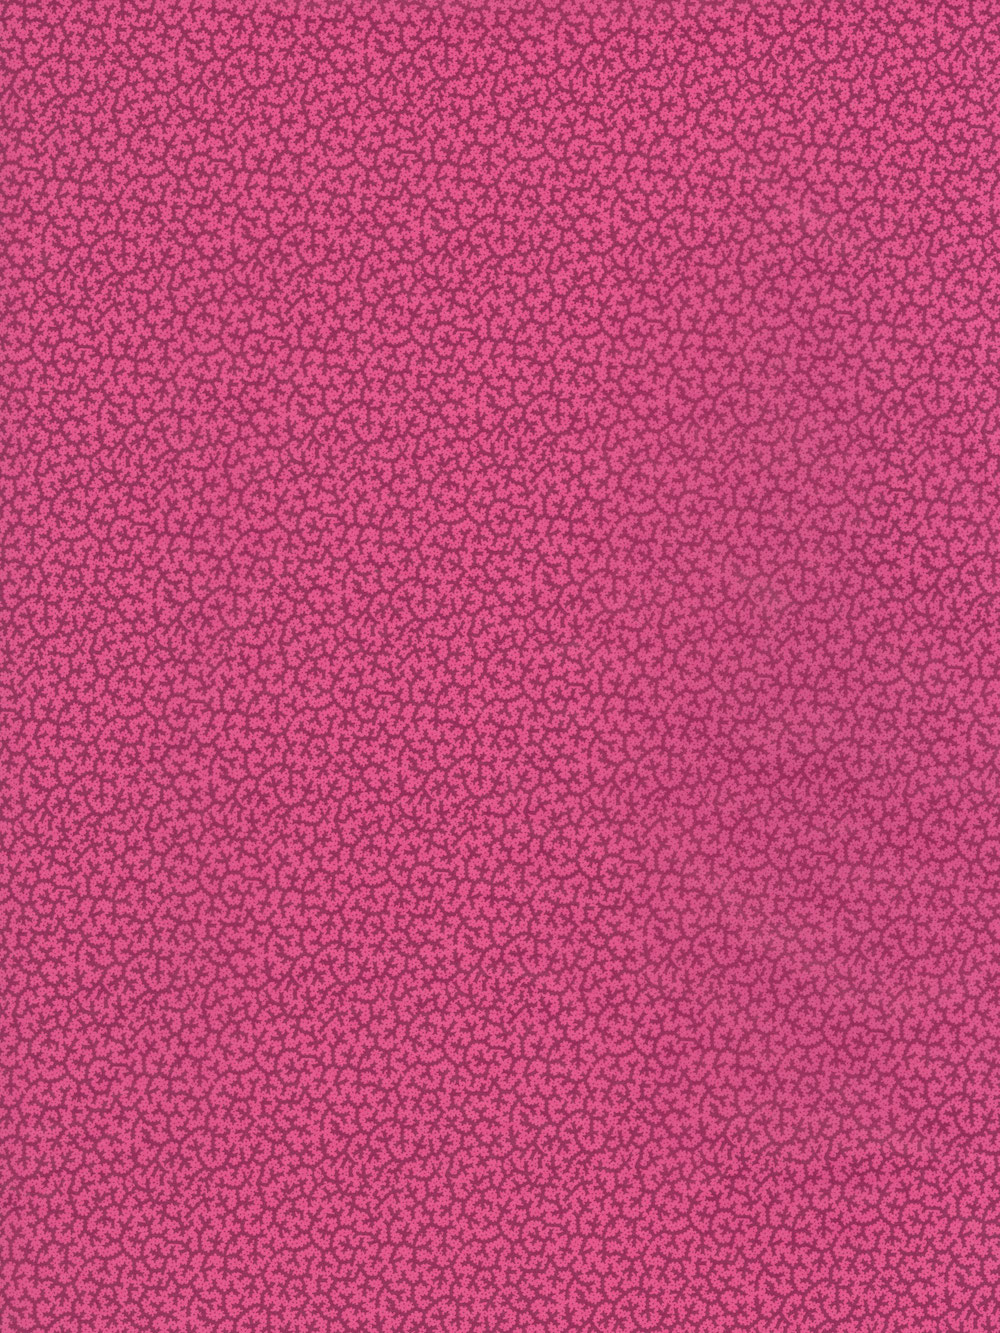 Décopatch-Papier 710 Ranken pink, 30 x 40 cm